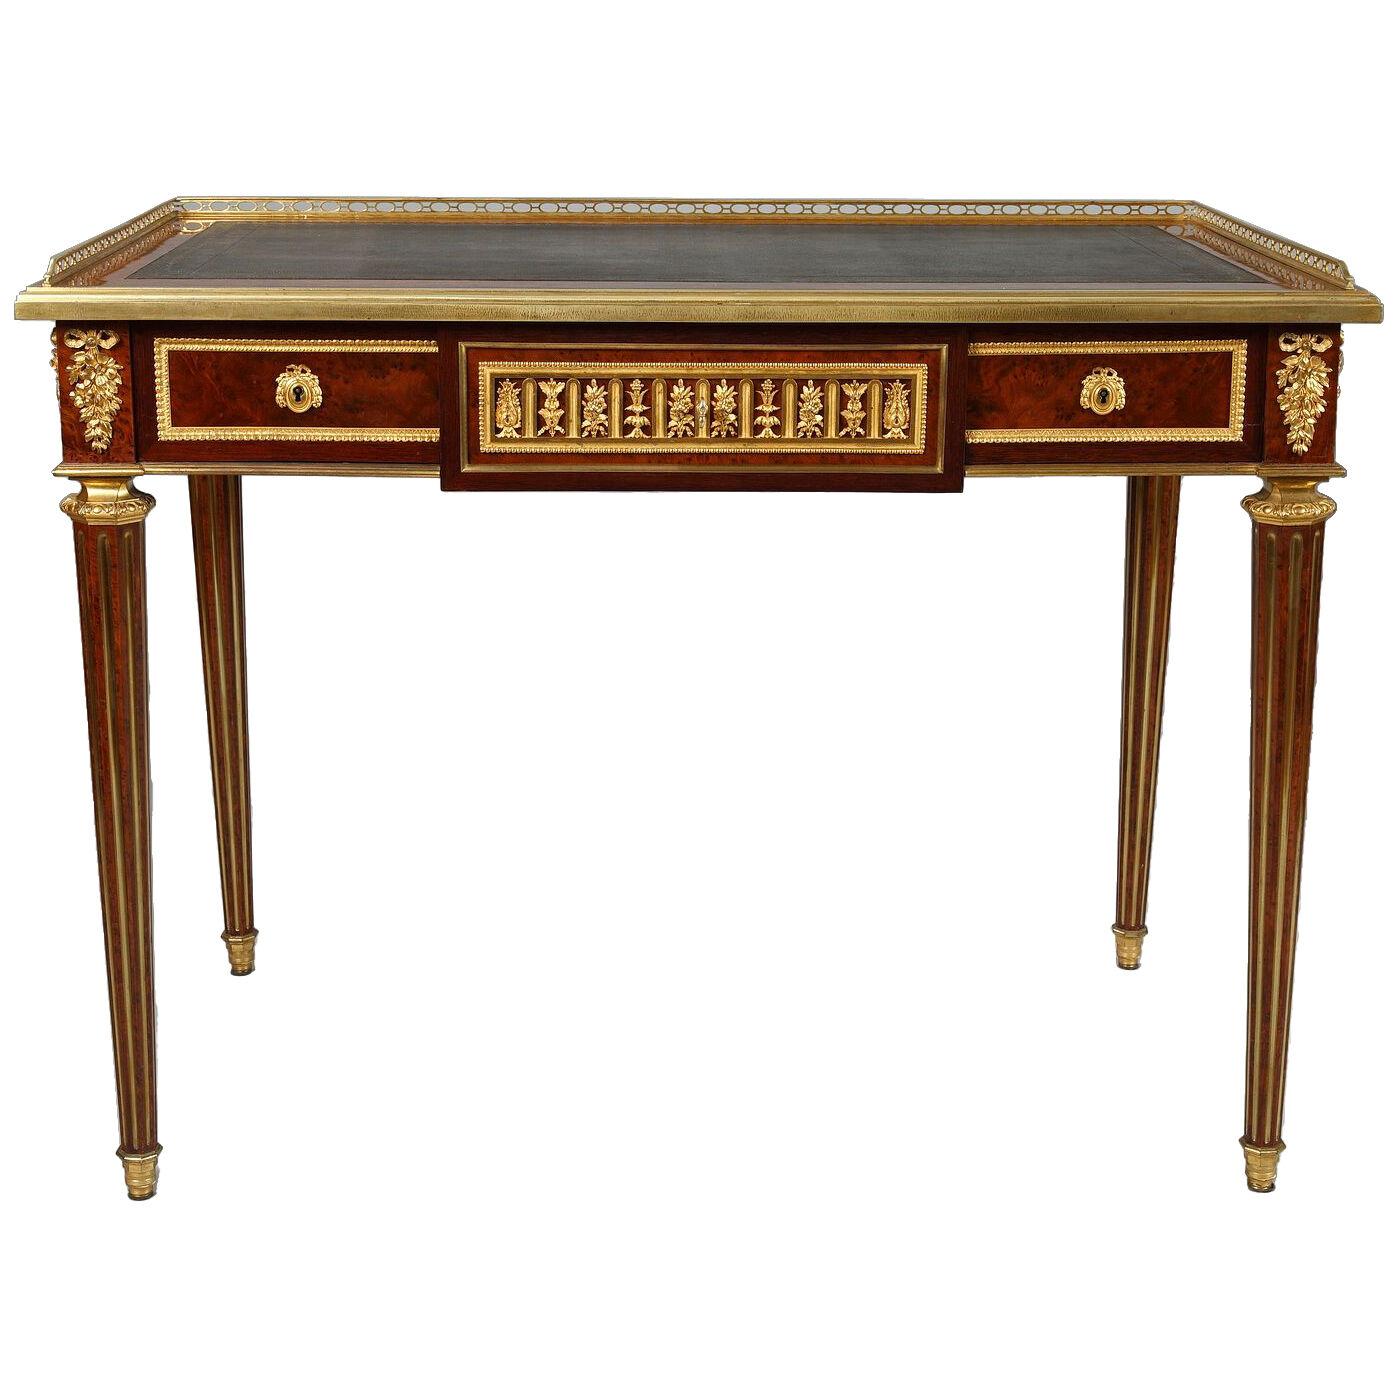 Exquisite Louis XVI Style Flat Desk by C.G Winckelsen, France, 1862